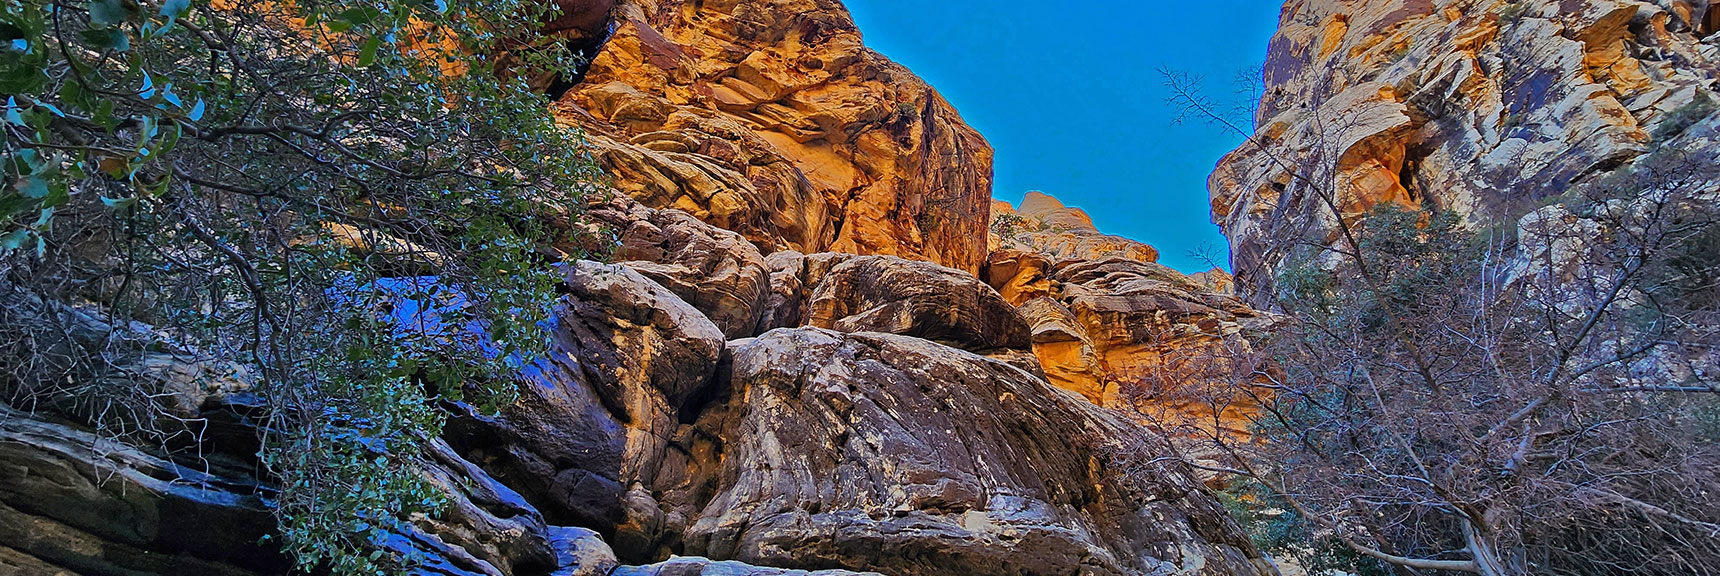 Canyon Walls Narrow. Soon Will Need to Scale a Few Boulders. Easy Class 3 Scrambling | Ice Box Canyon | Red Rock Canyon NCA, Nevada | Las Vegas Area Trails | David Smith